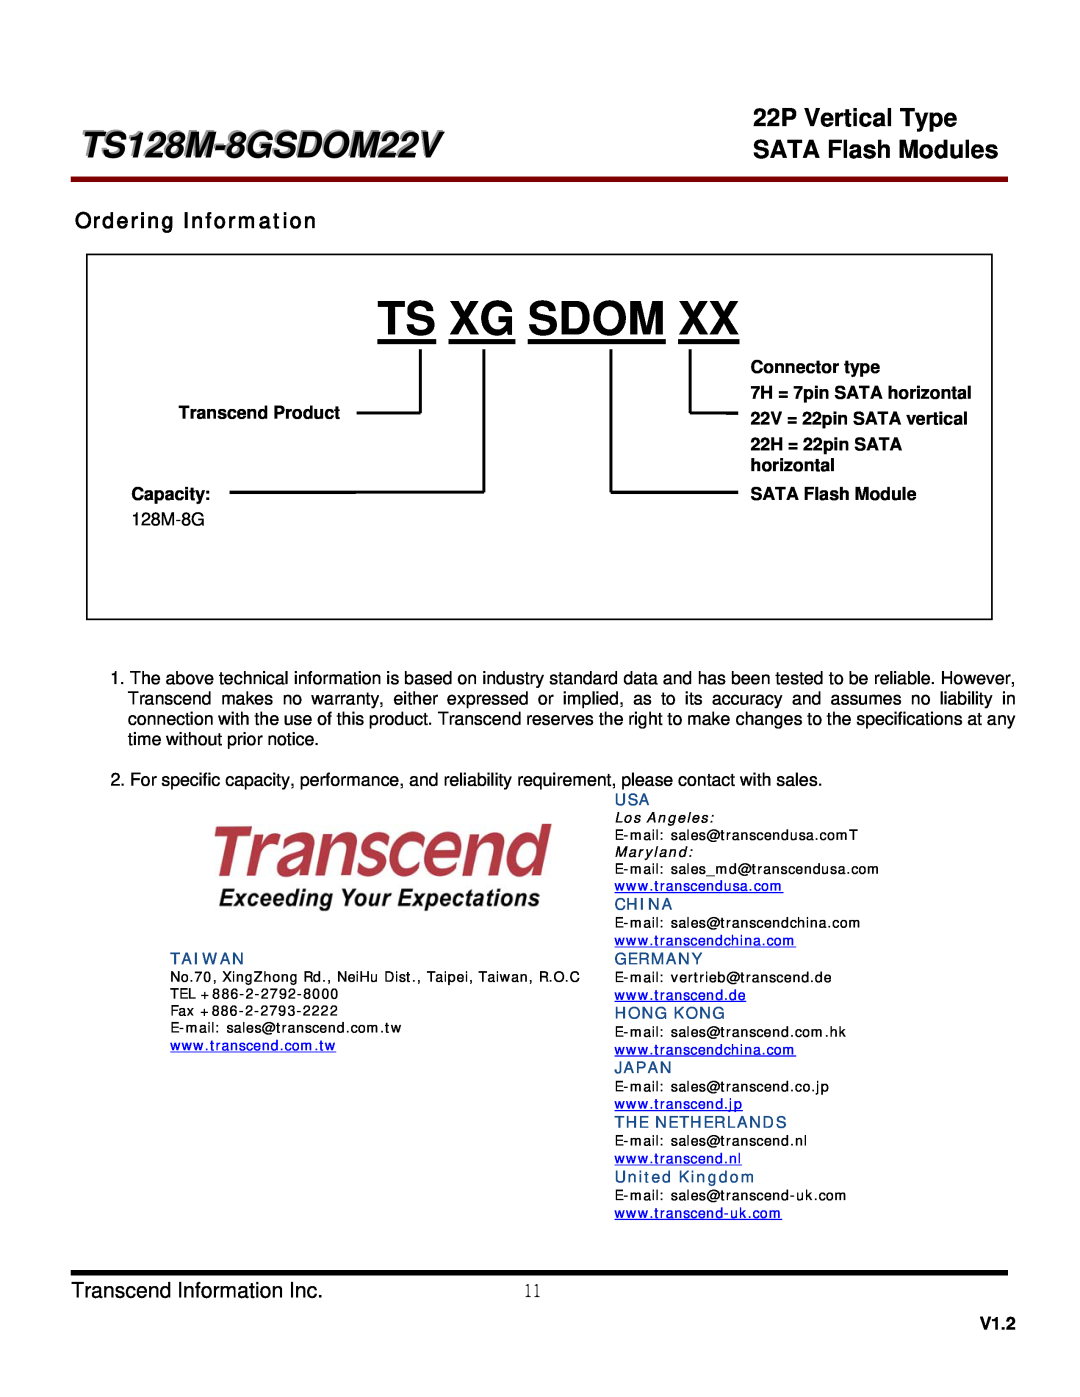 Transcend Information TS4GSDOM22V, TS128MSDOM22V Ordering Information, Ts Xg Sdom, TS128M-8GSDOM22V, 22P Vertical Type 